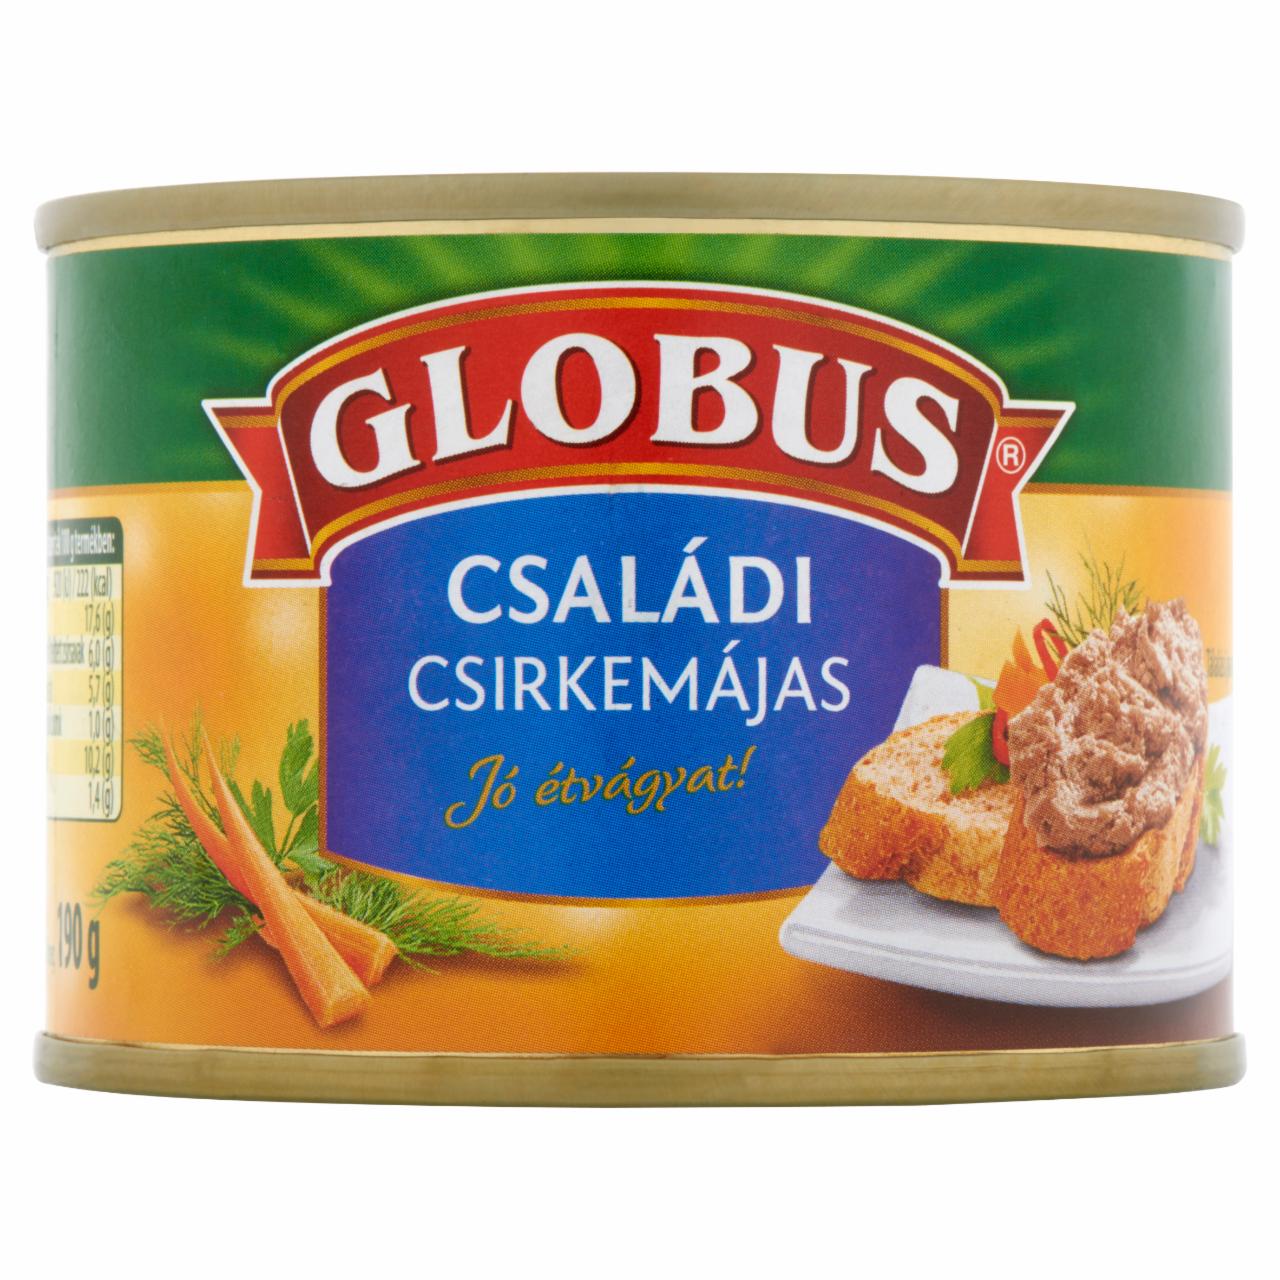 Képek - Globus családi csirkemájas 190 g